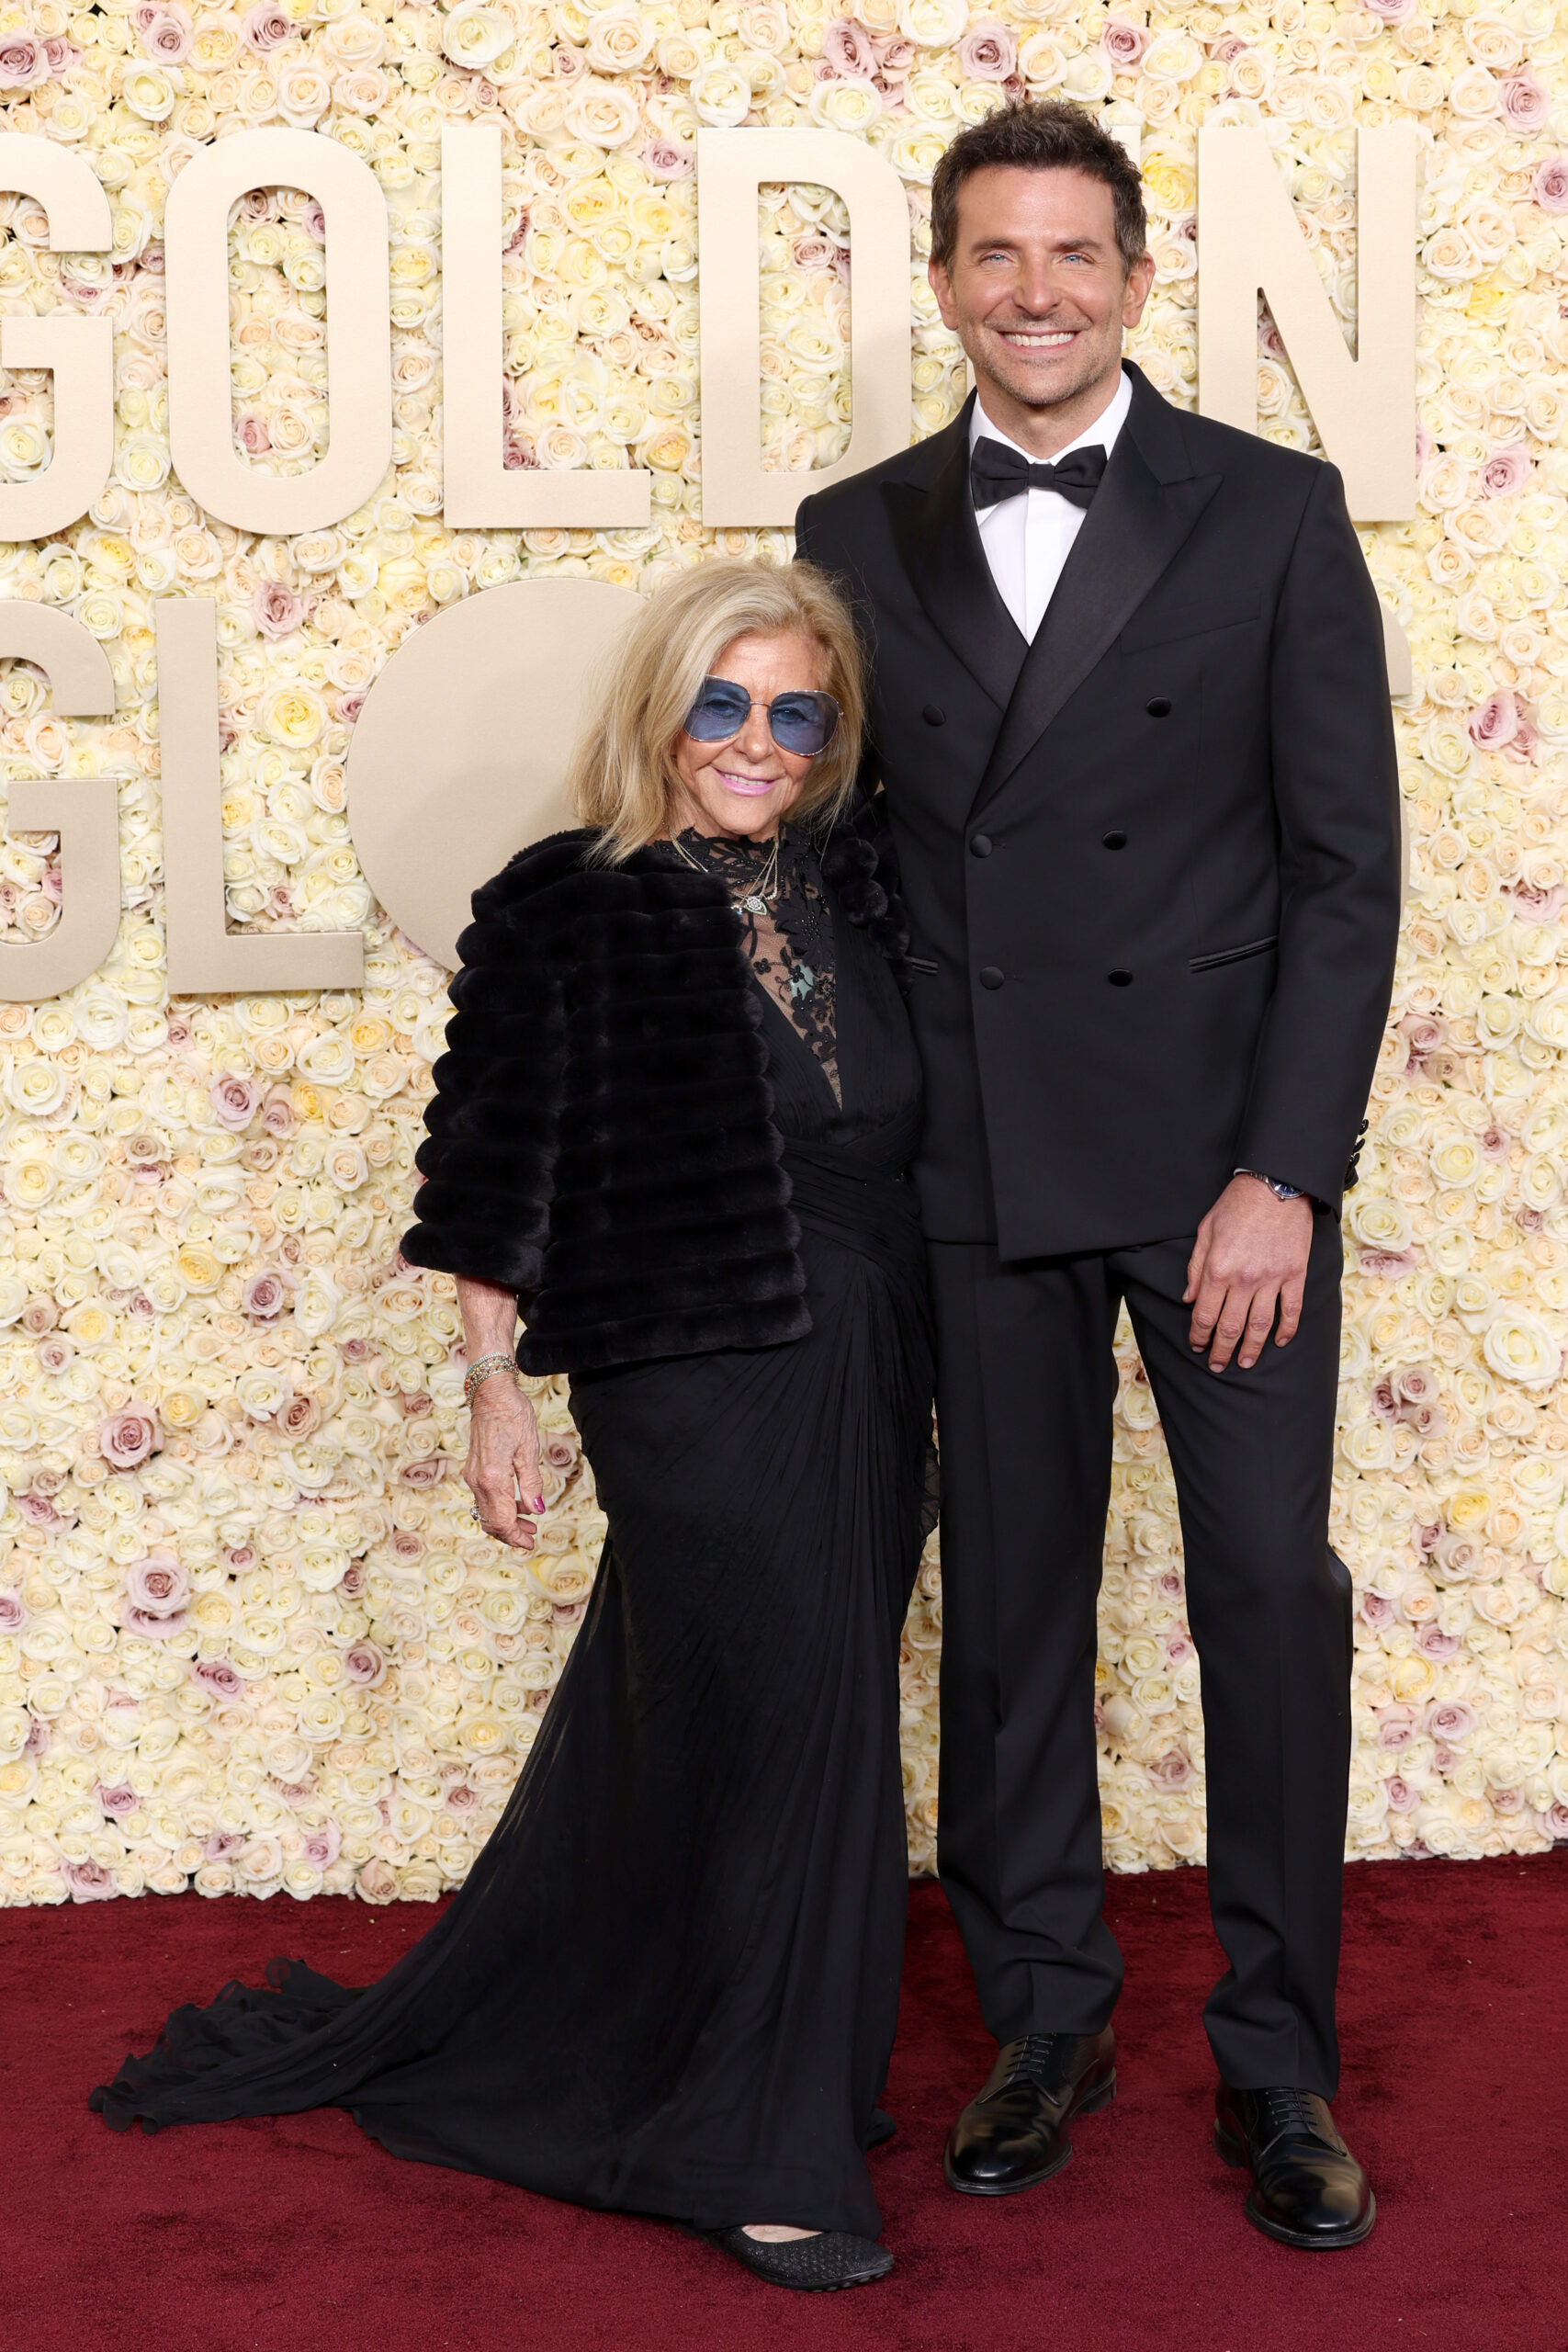 Bradley Cooper and his mother, Gloria Campano